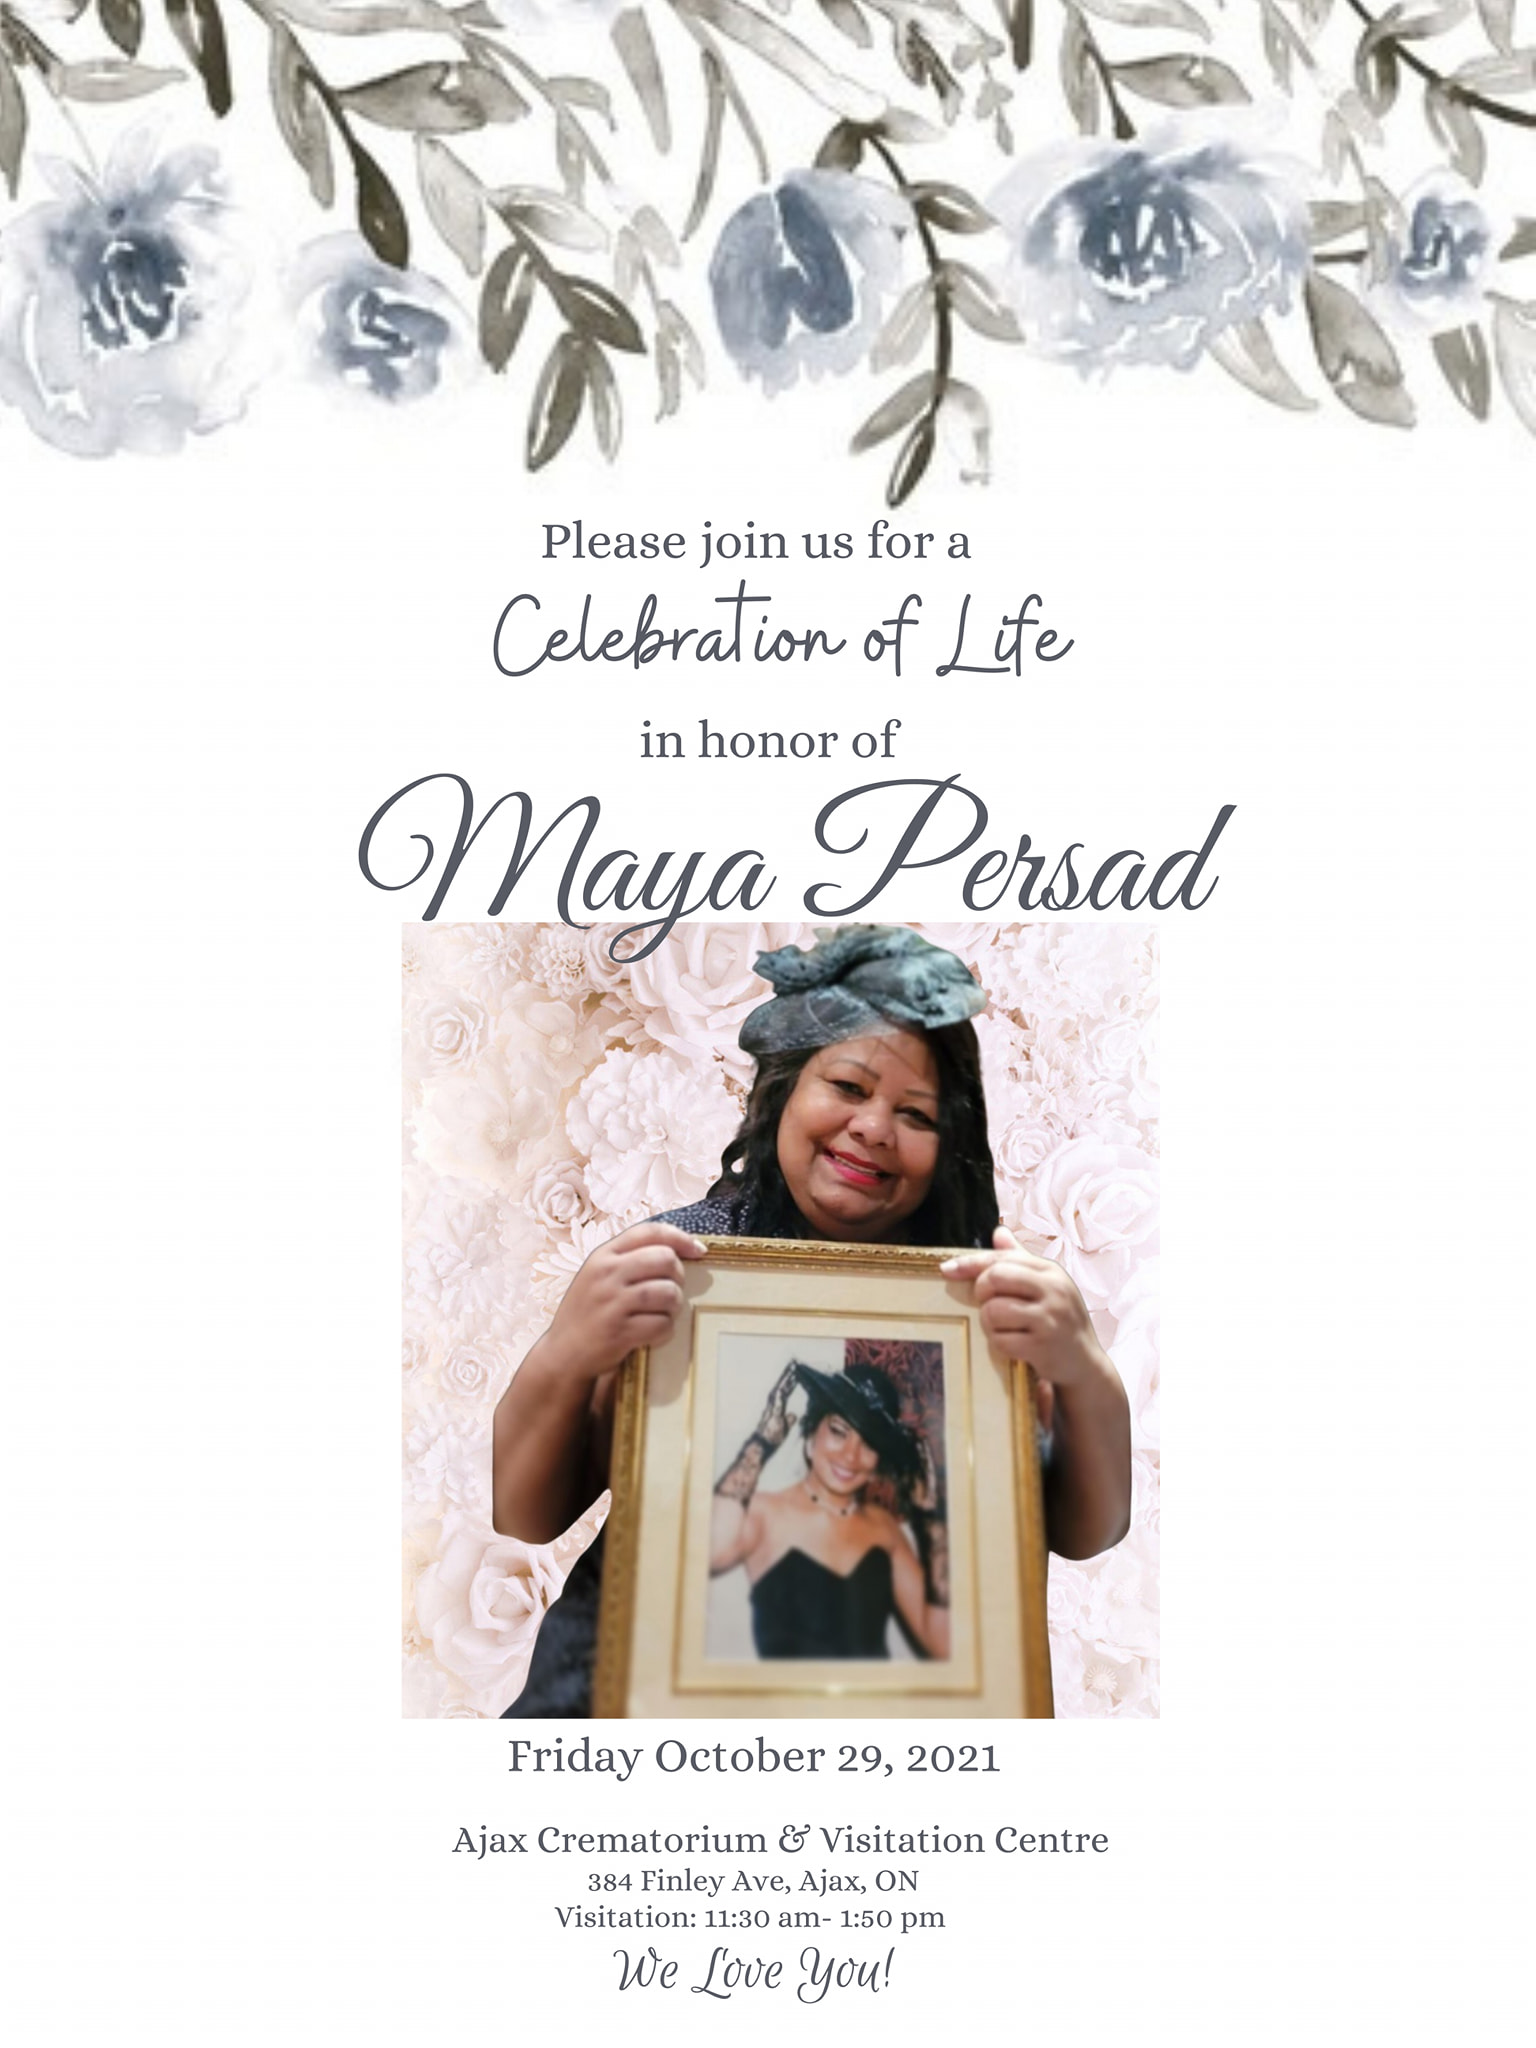 Celebrating the Life of Maya Persad